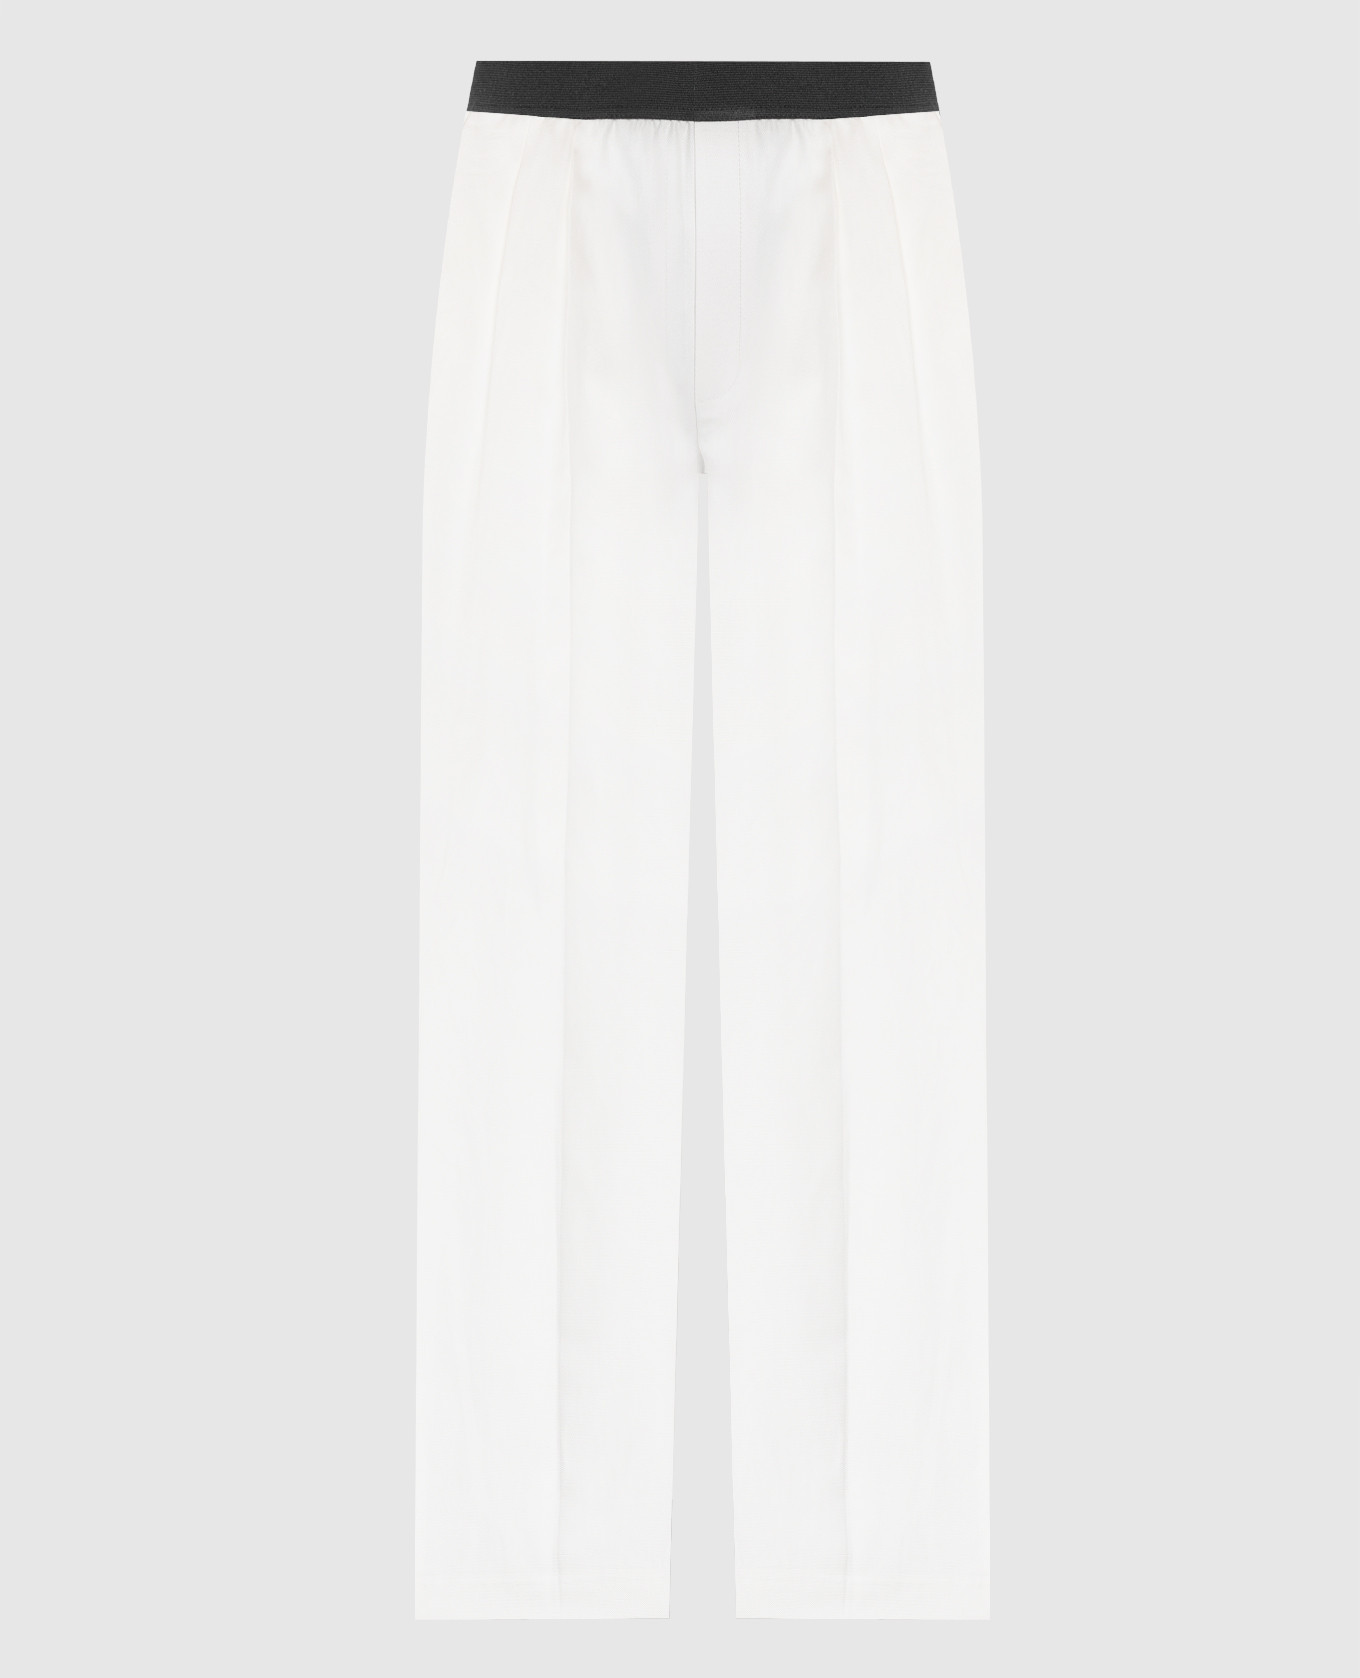 TAKAROA white pants with linen